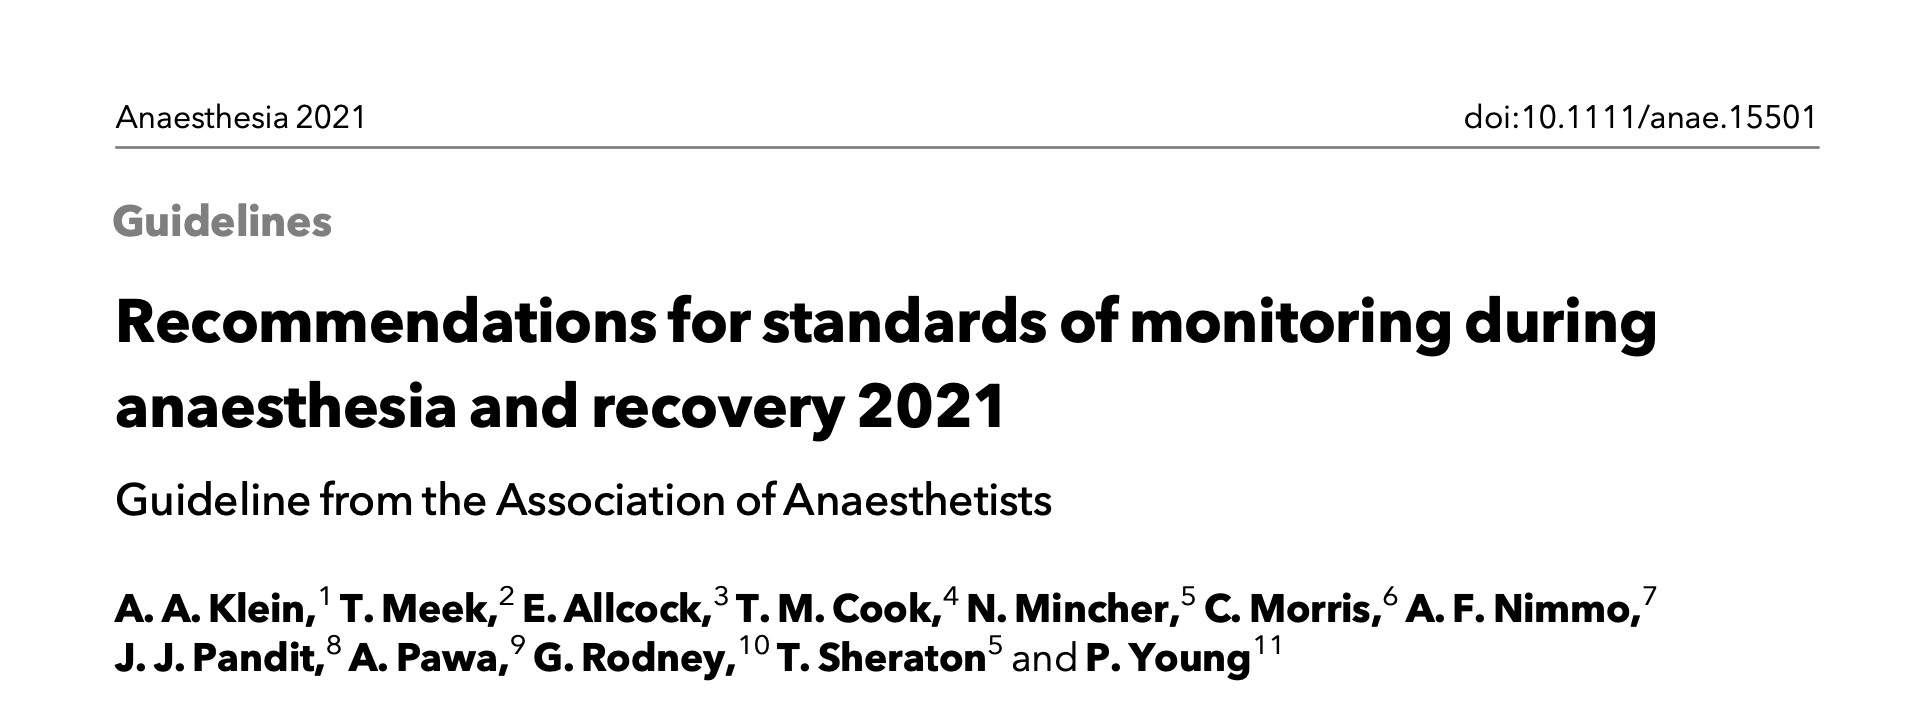 2021 AA指南：麻醉和恢复期间监测标准建议